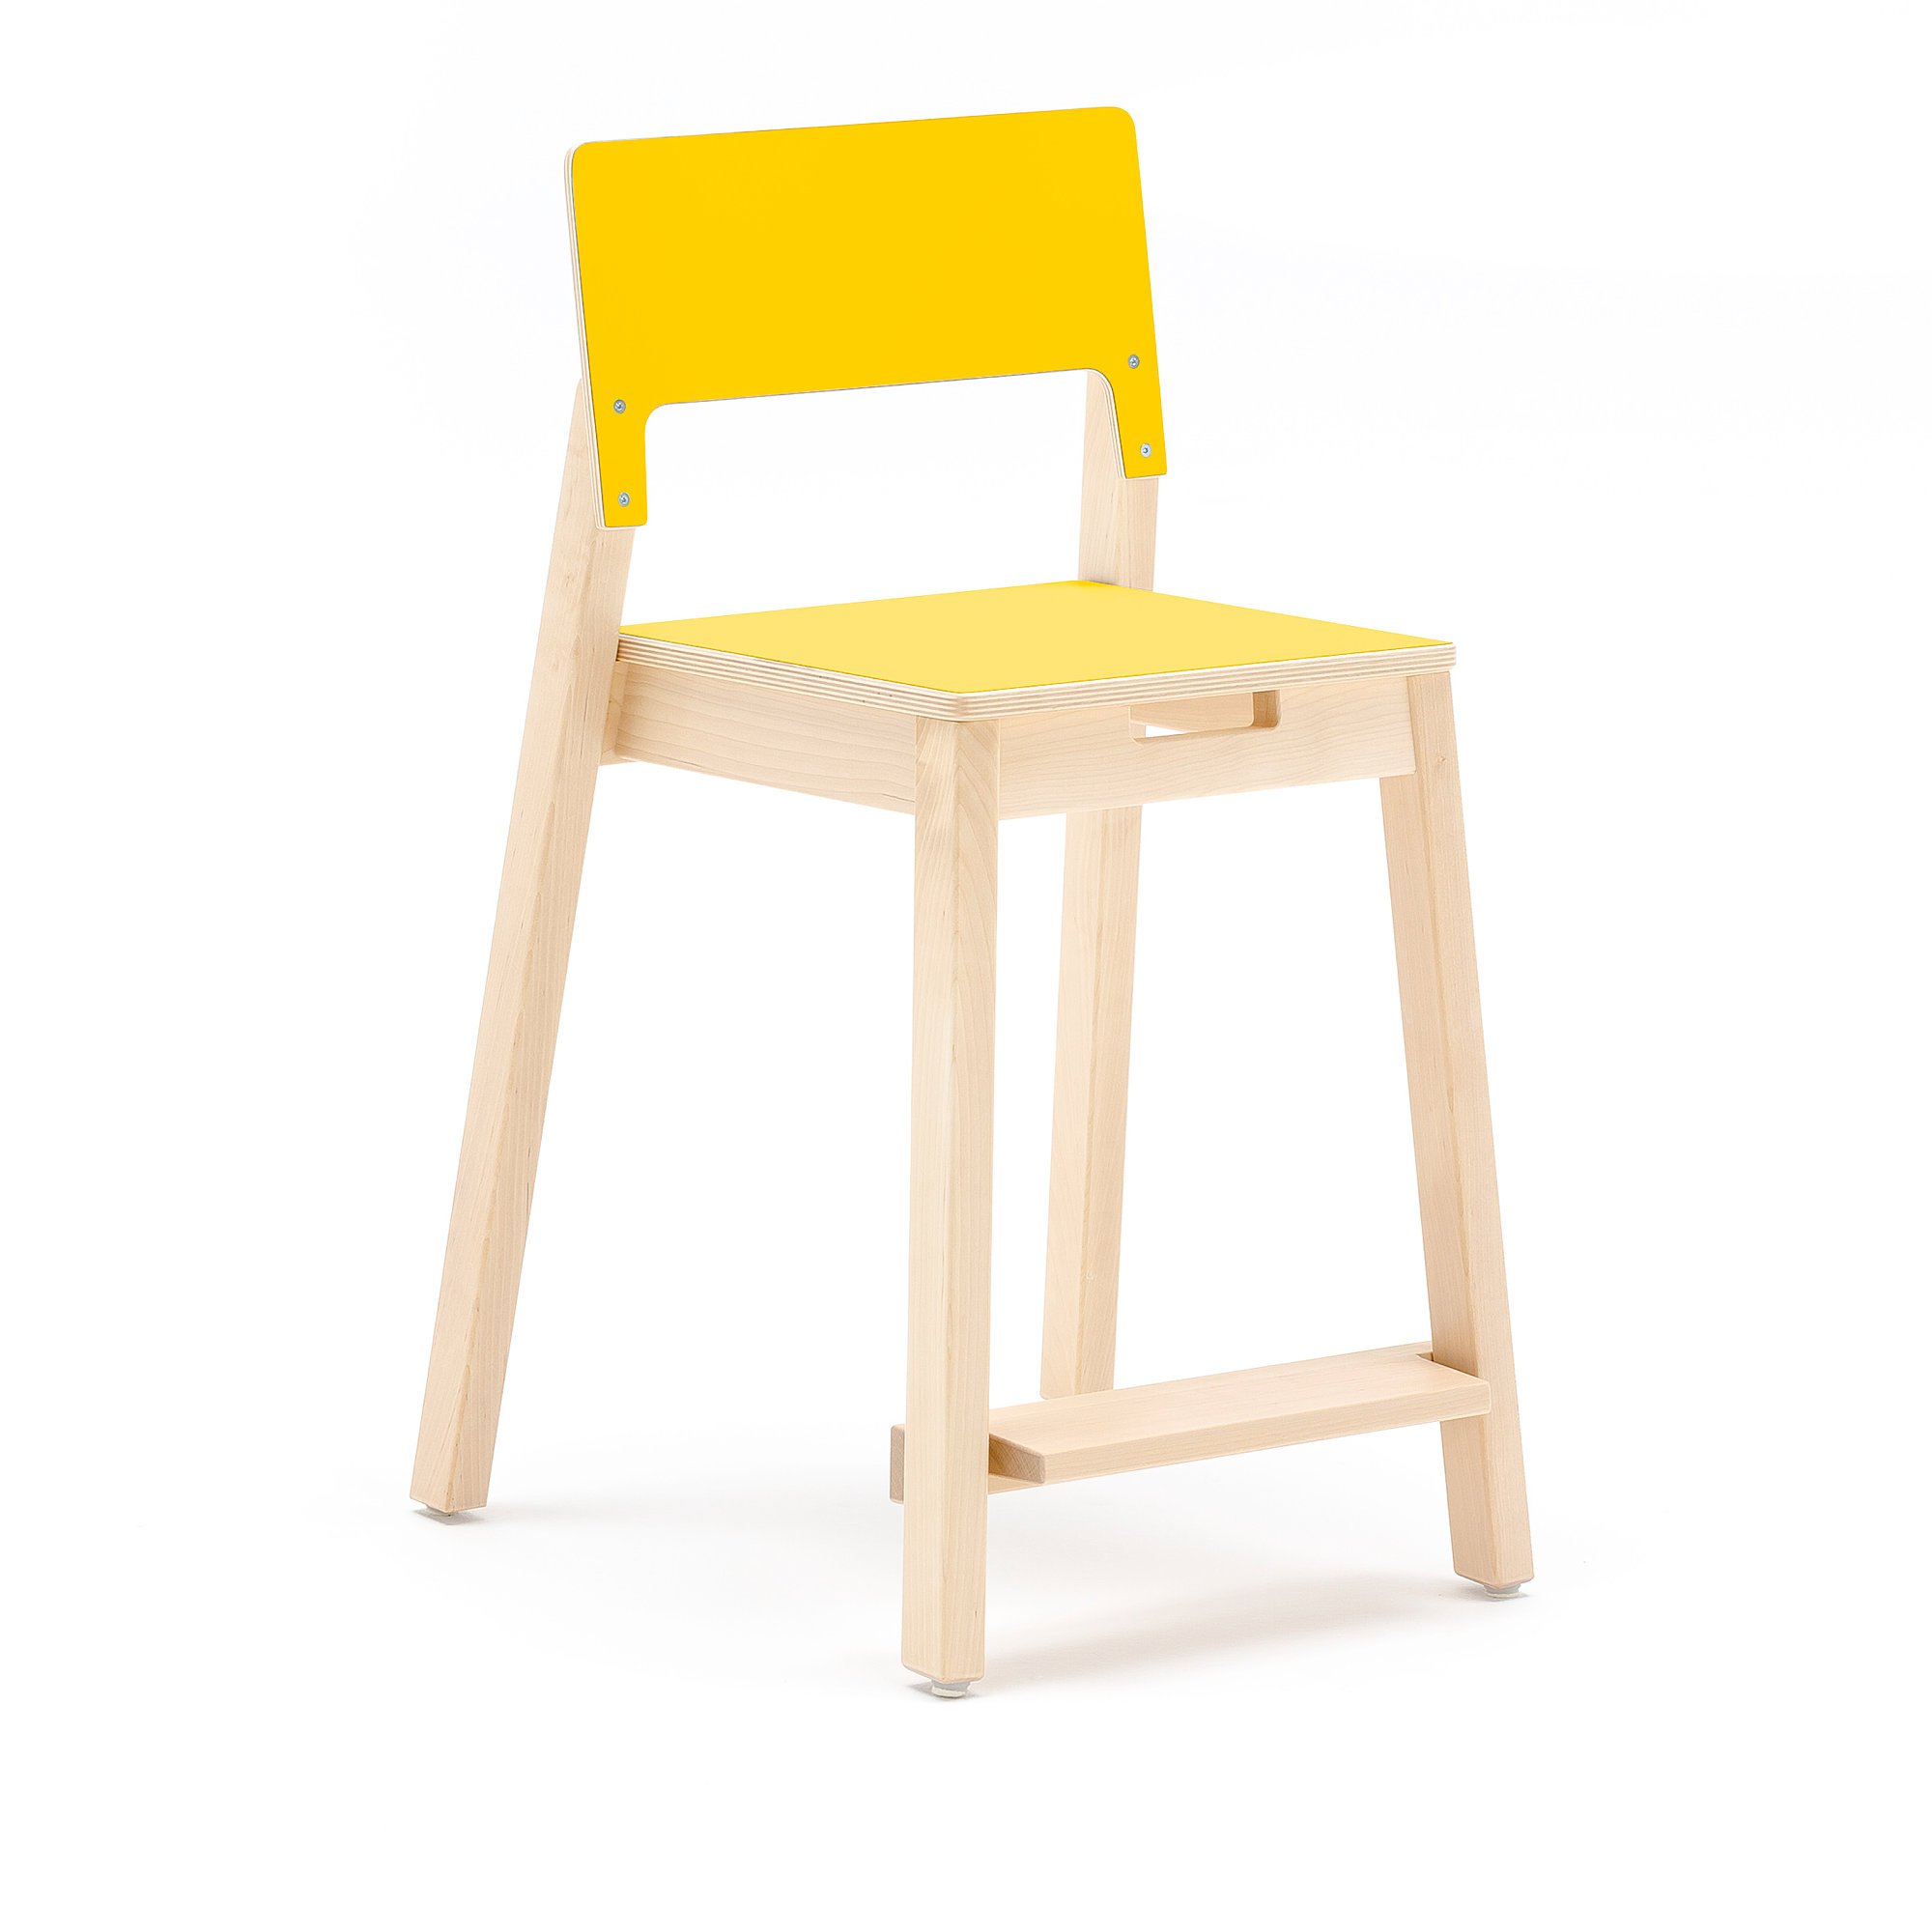 Tall children's chair LOVE, H 500 mm, birch, yellow laminate